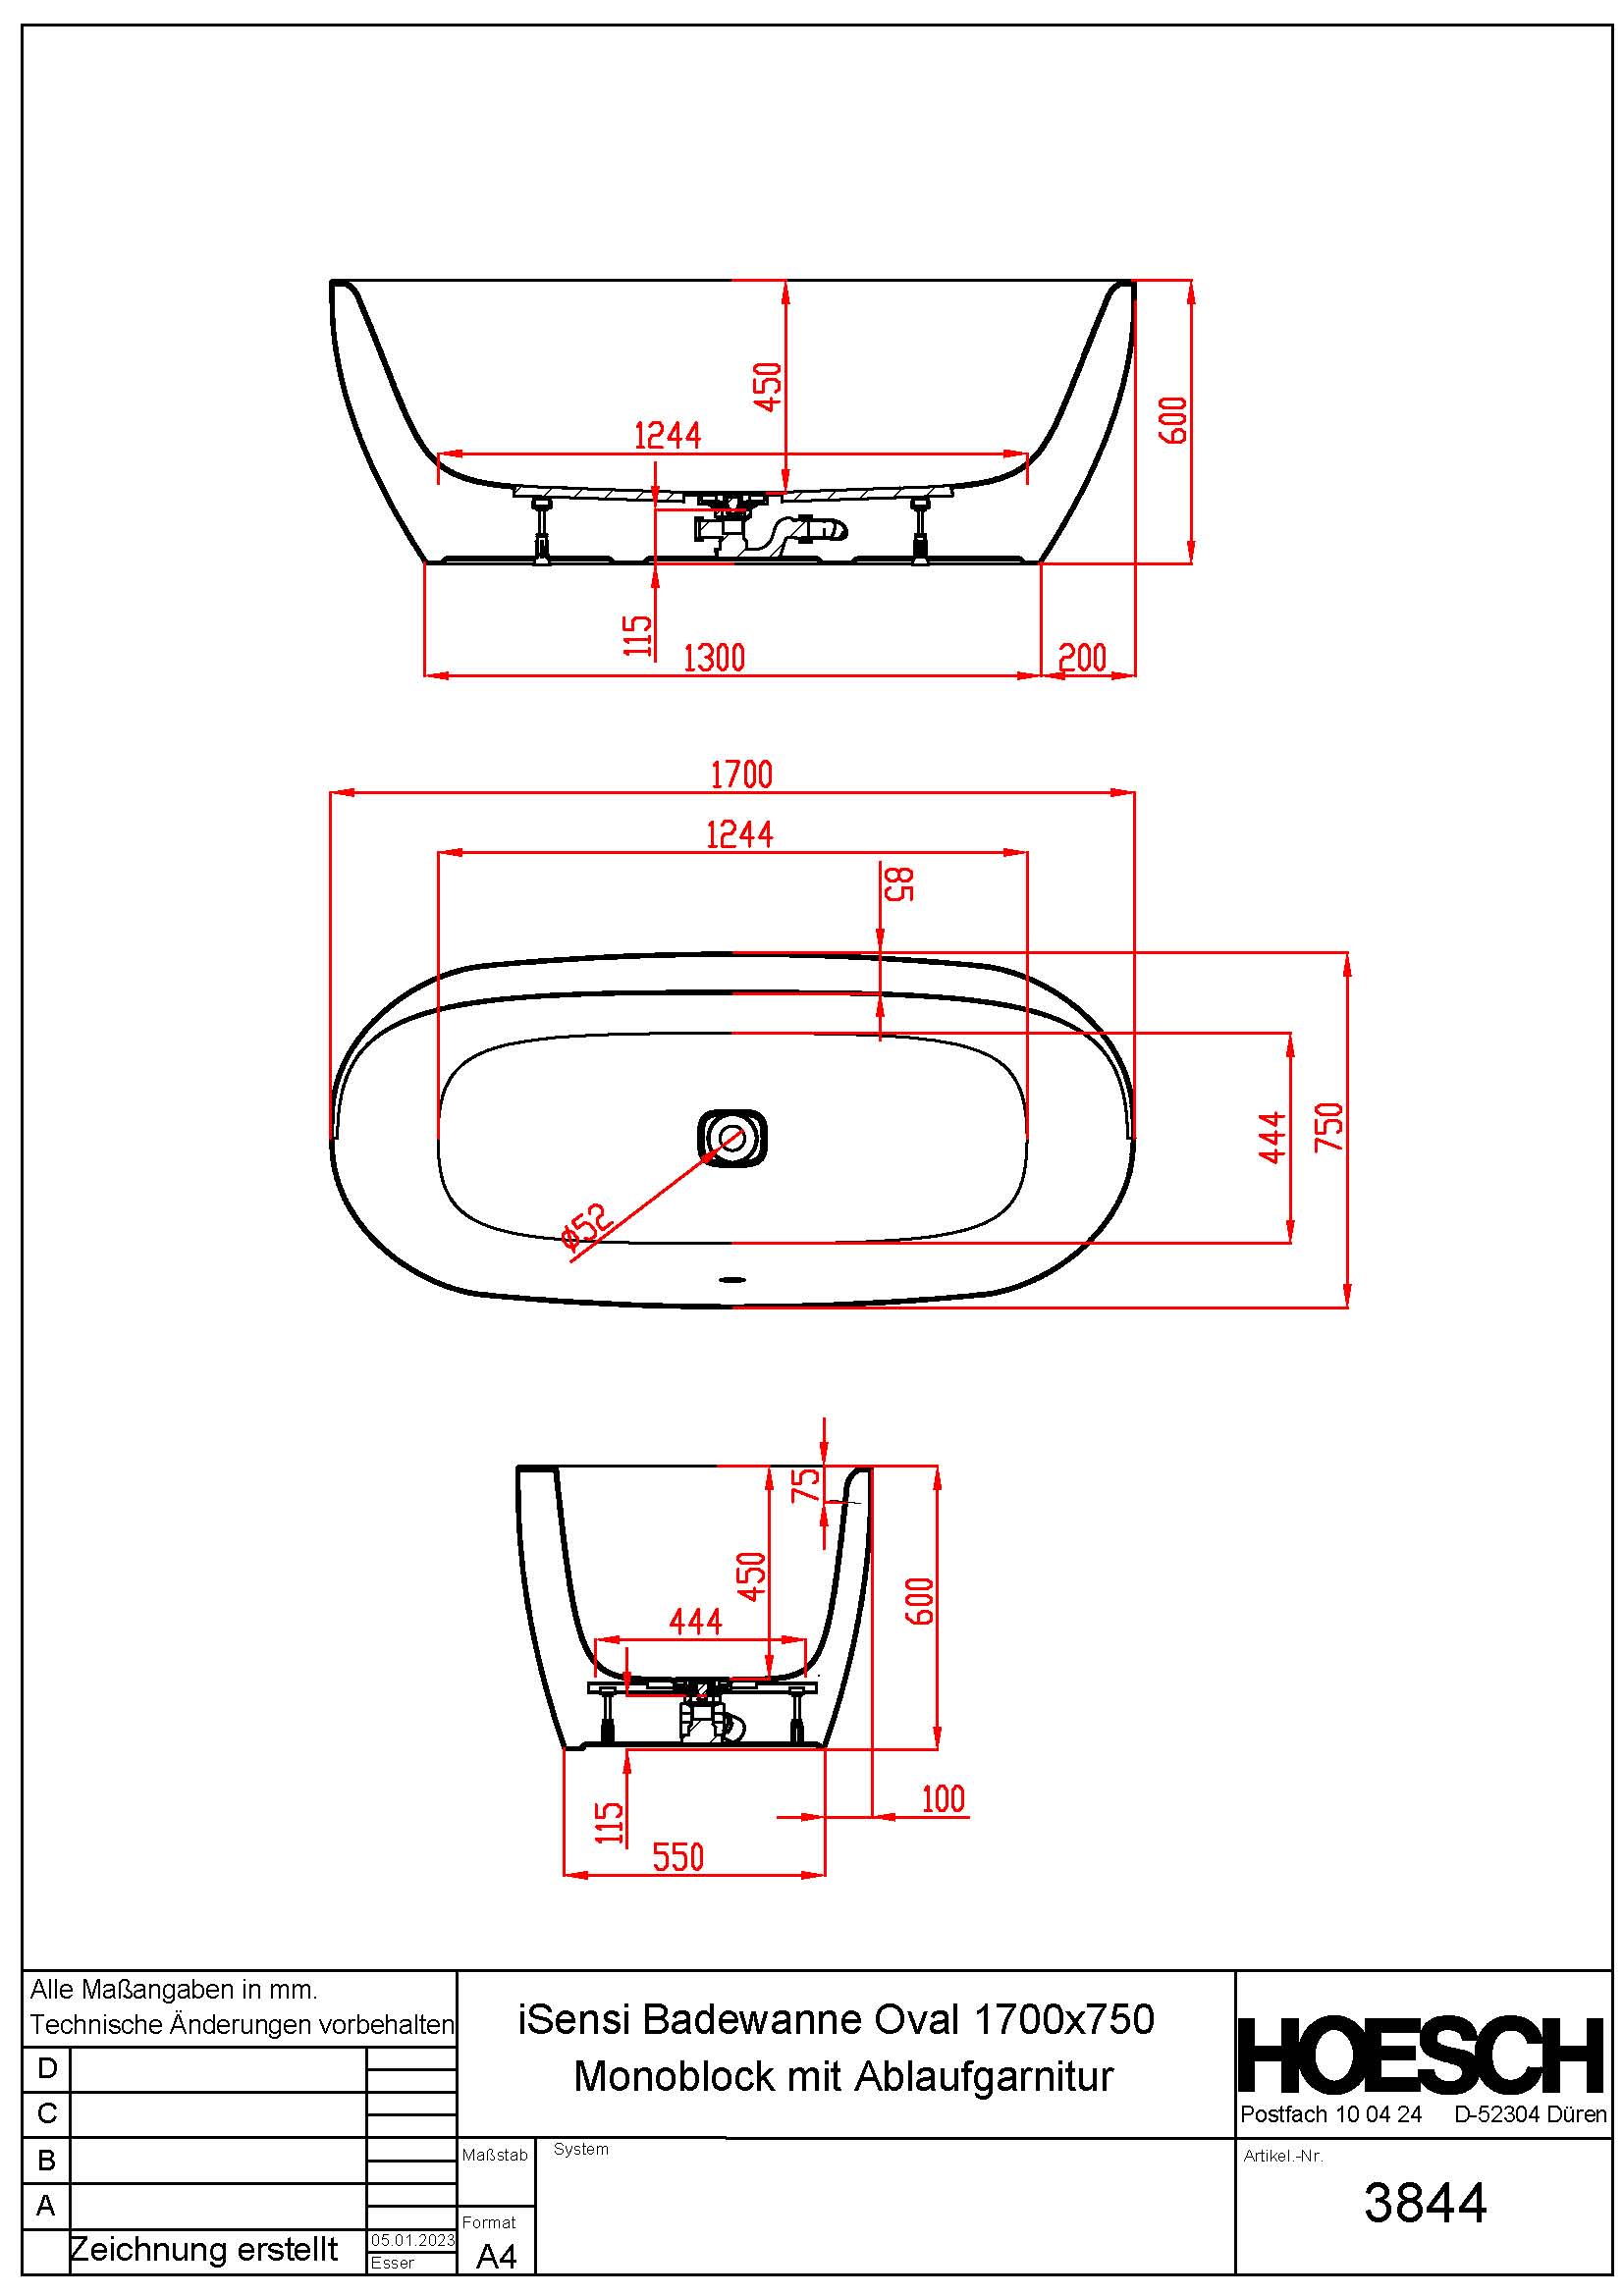 Badewanne iSensi Oval 1700x750 (Monoblock) mit Ablaufgarnitur